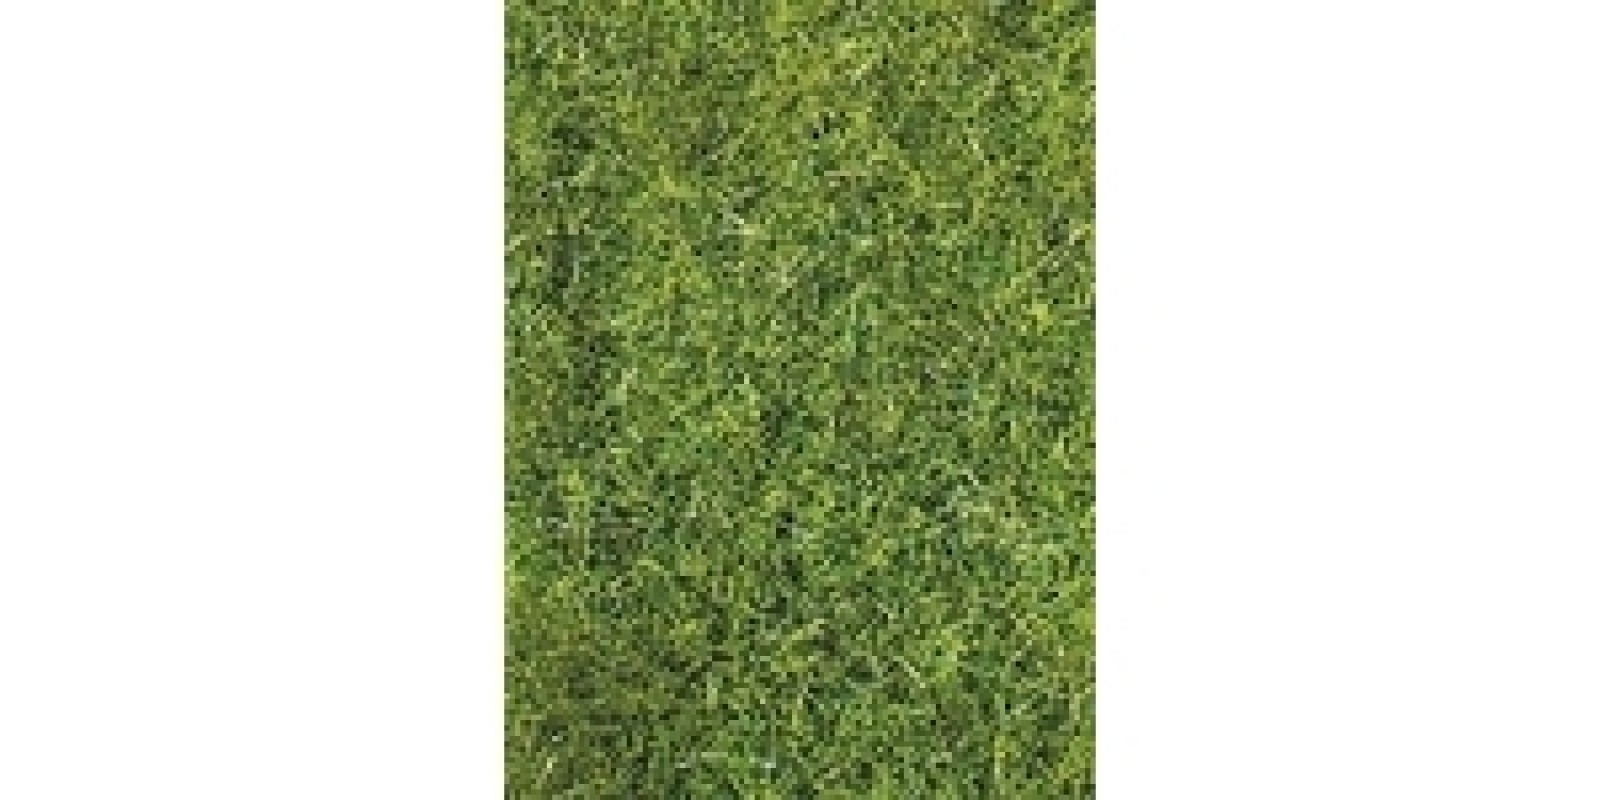 He3369 static wild grass dark green, 75g